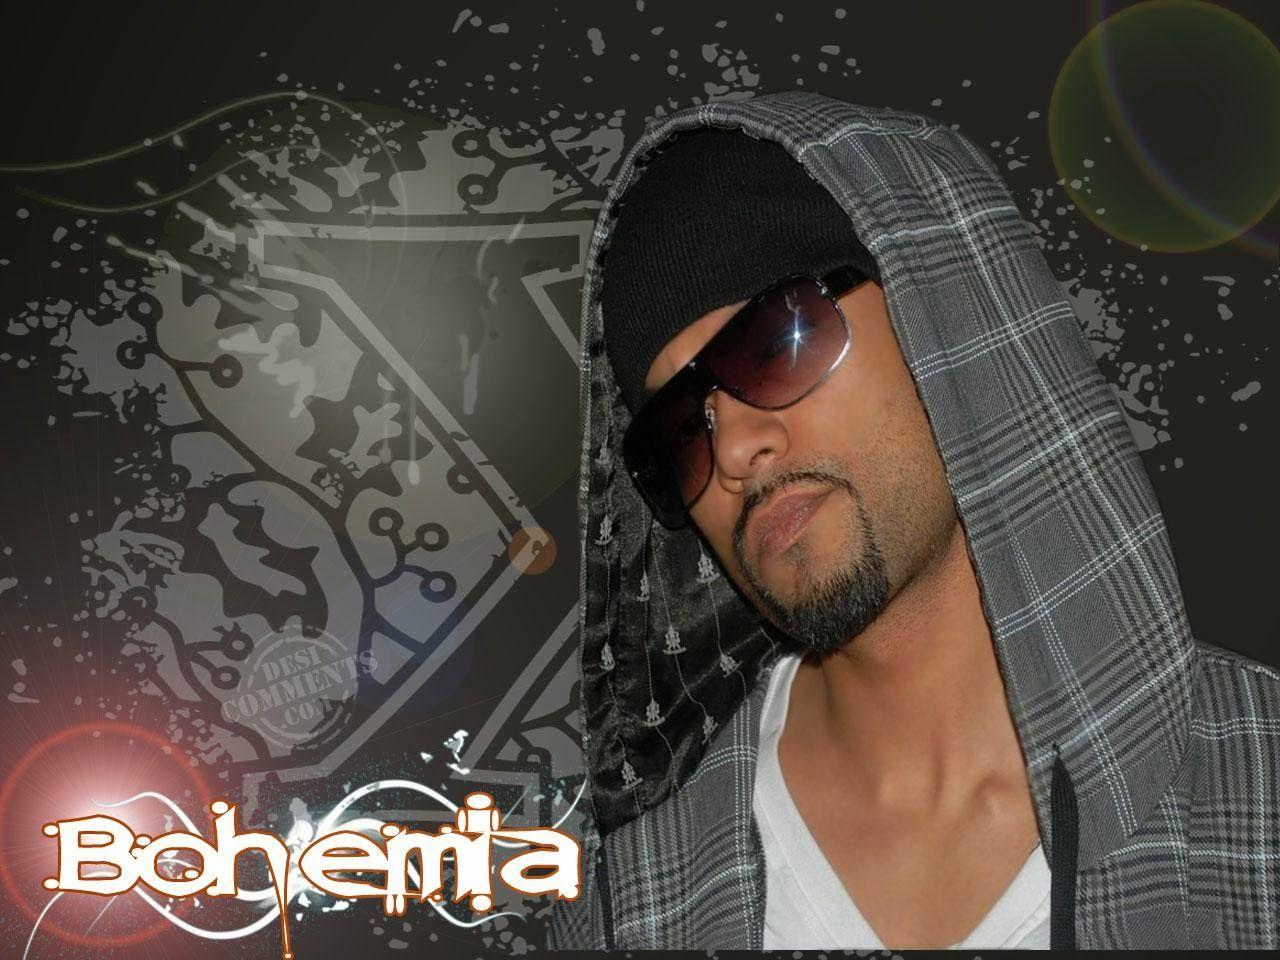 Bohemia HD Wallpaper. Bohemia's Official Website. Bohemia